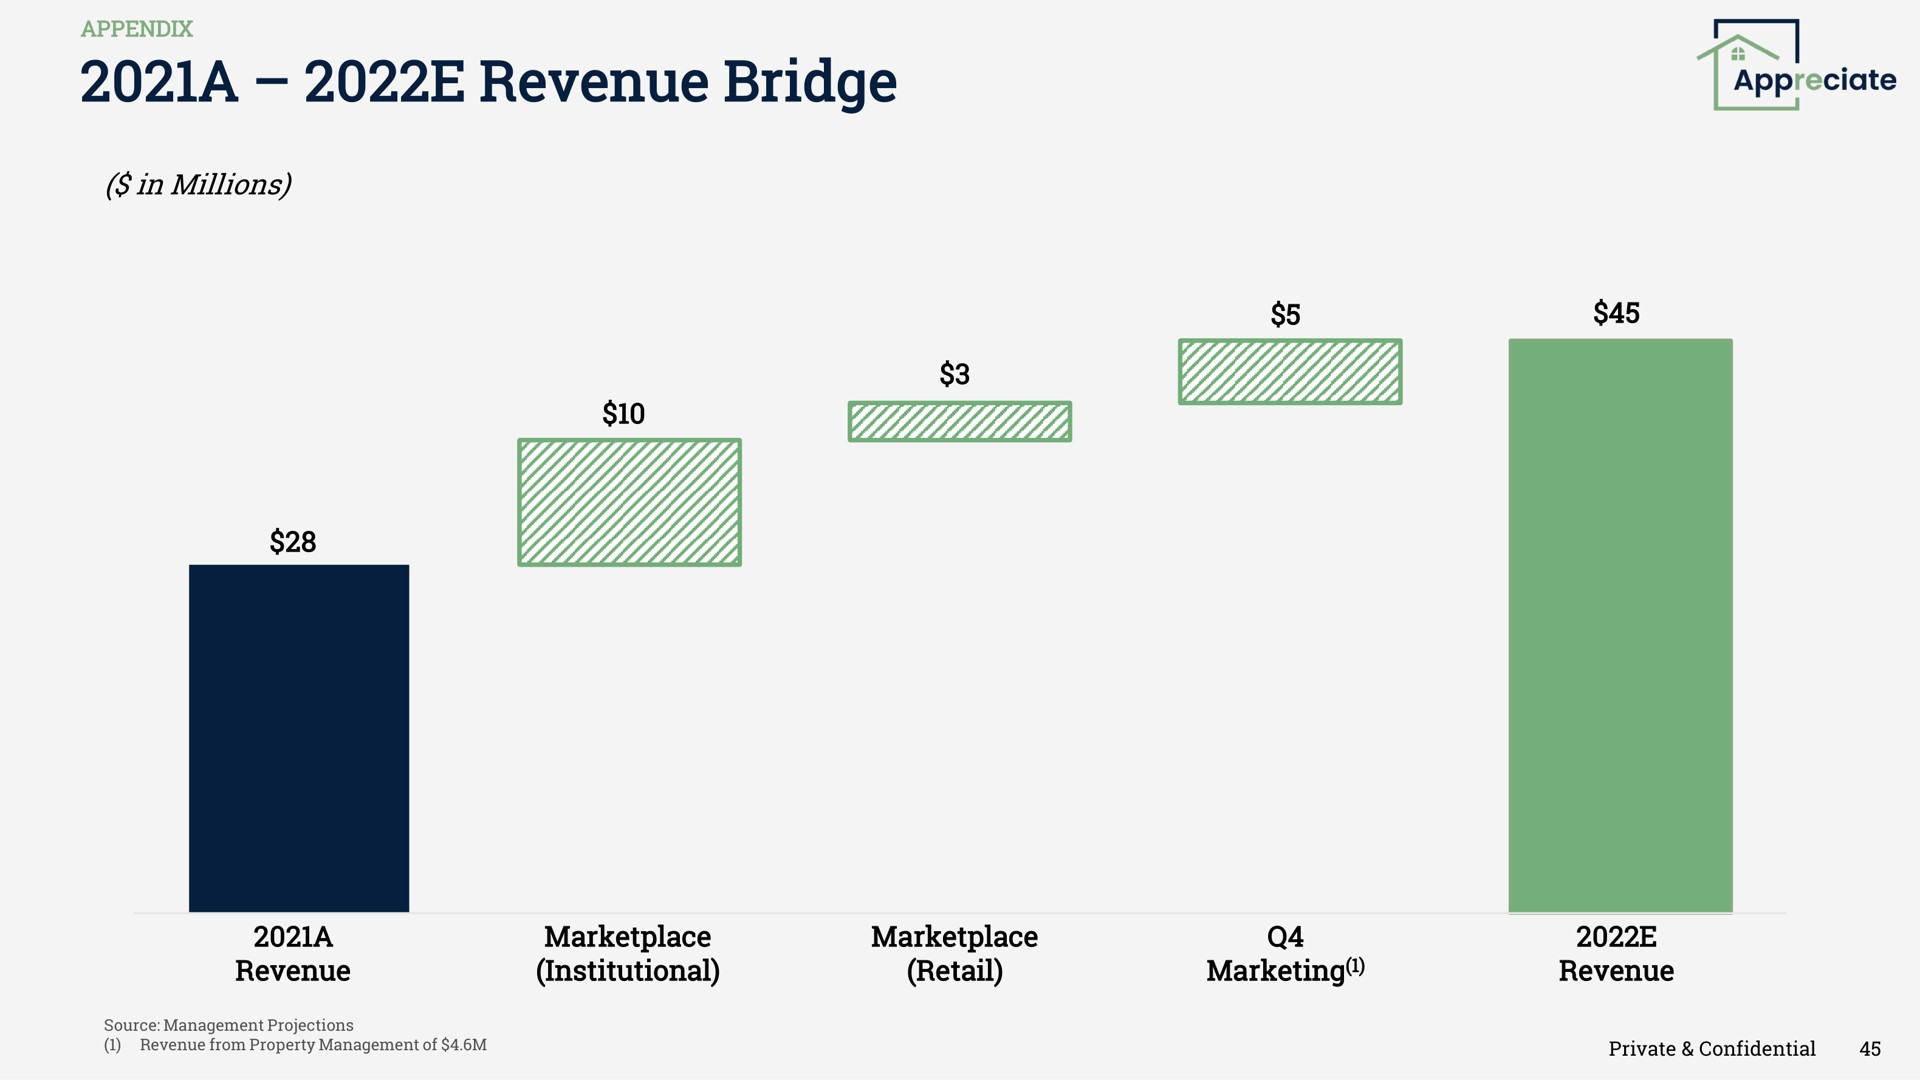 a revenue bridge | Appreciate